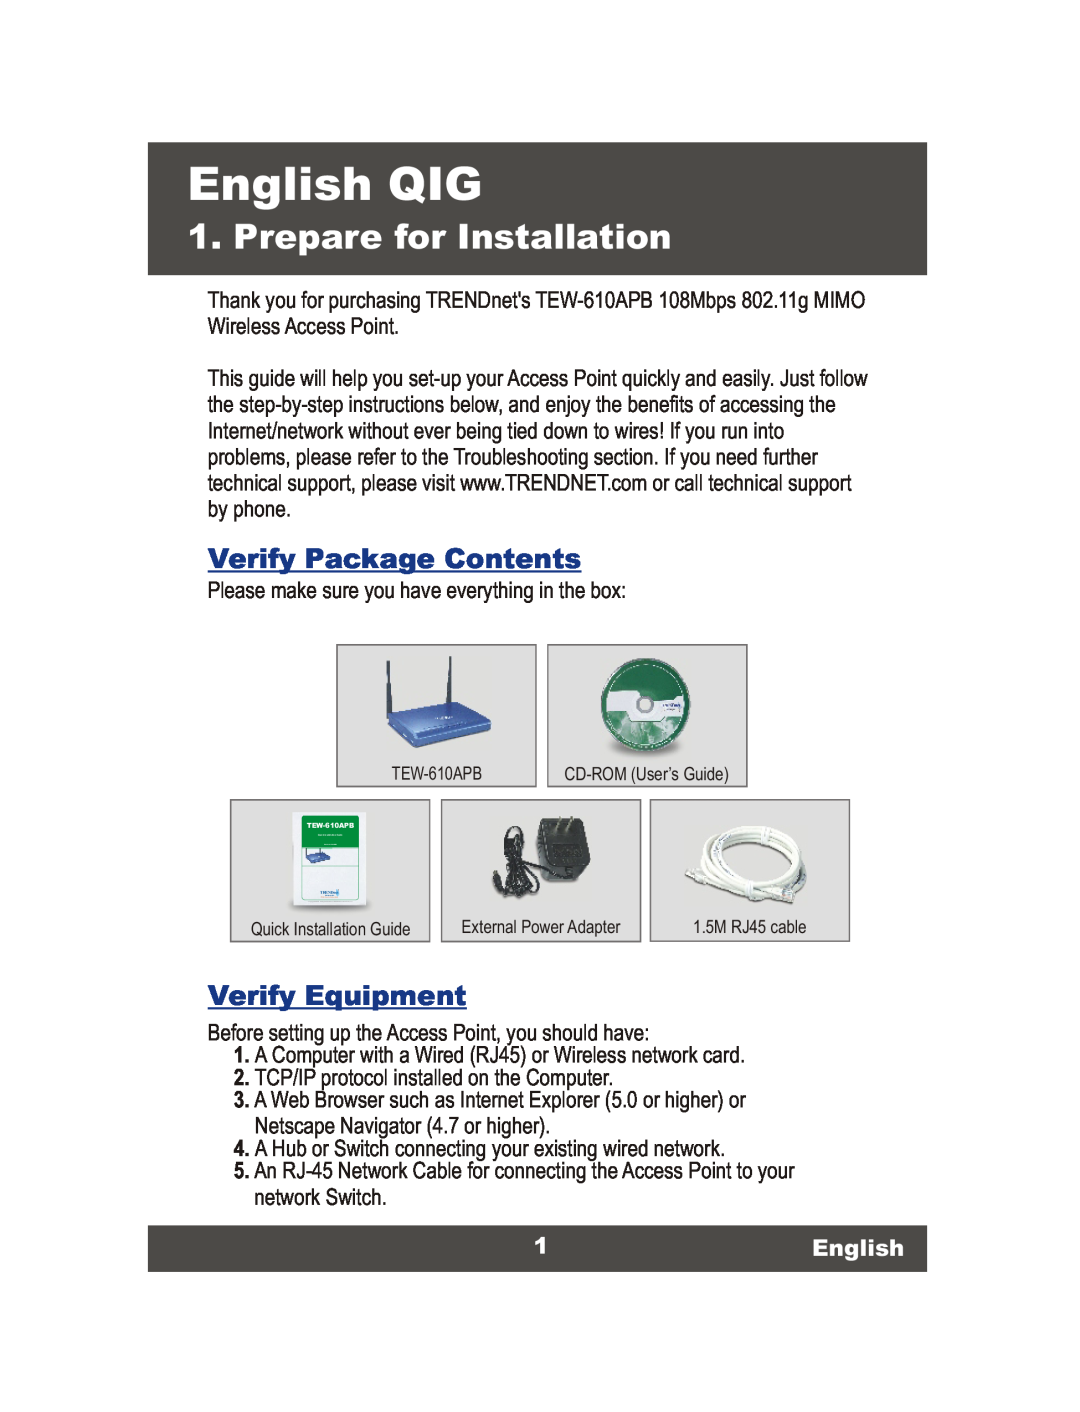 TRENDnet TEW-610APB manual Prepare for Installation, Verify Package Contents, Verify Equipment, 1English, English QIG 